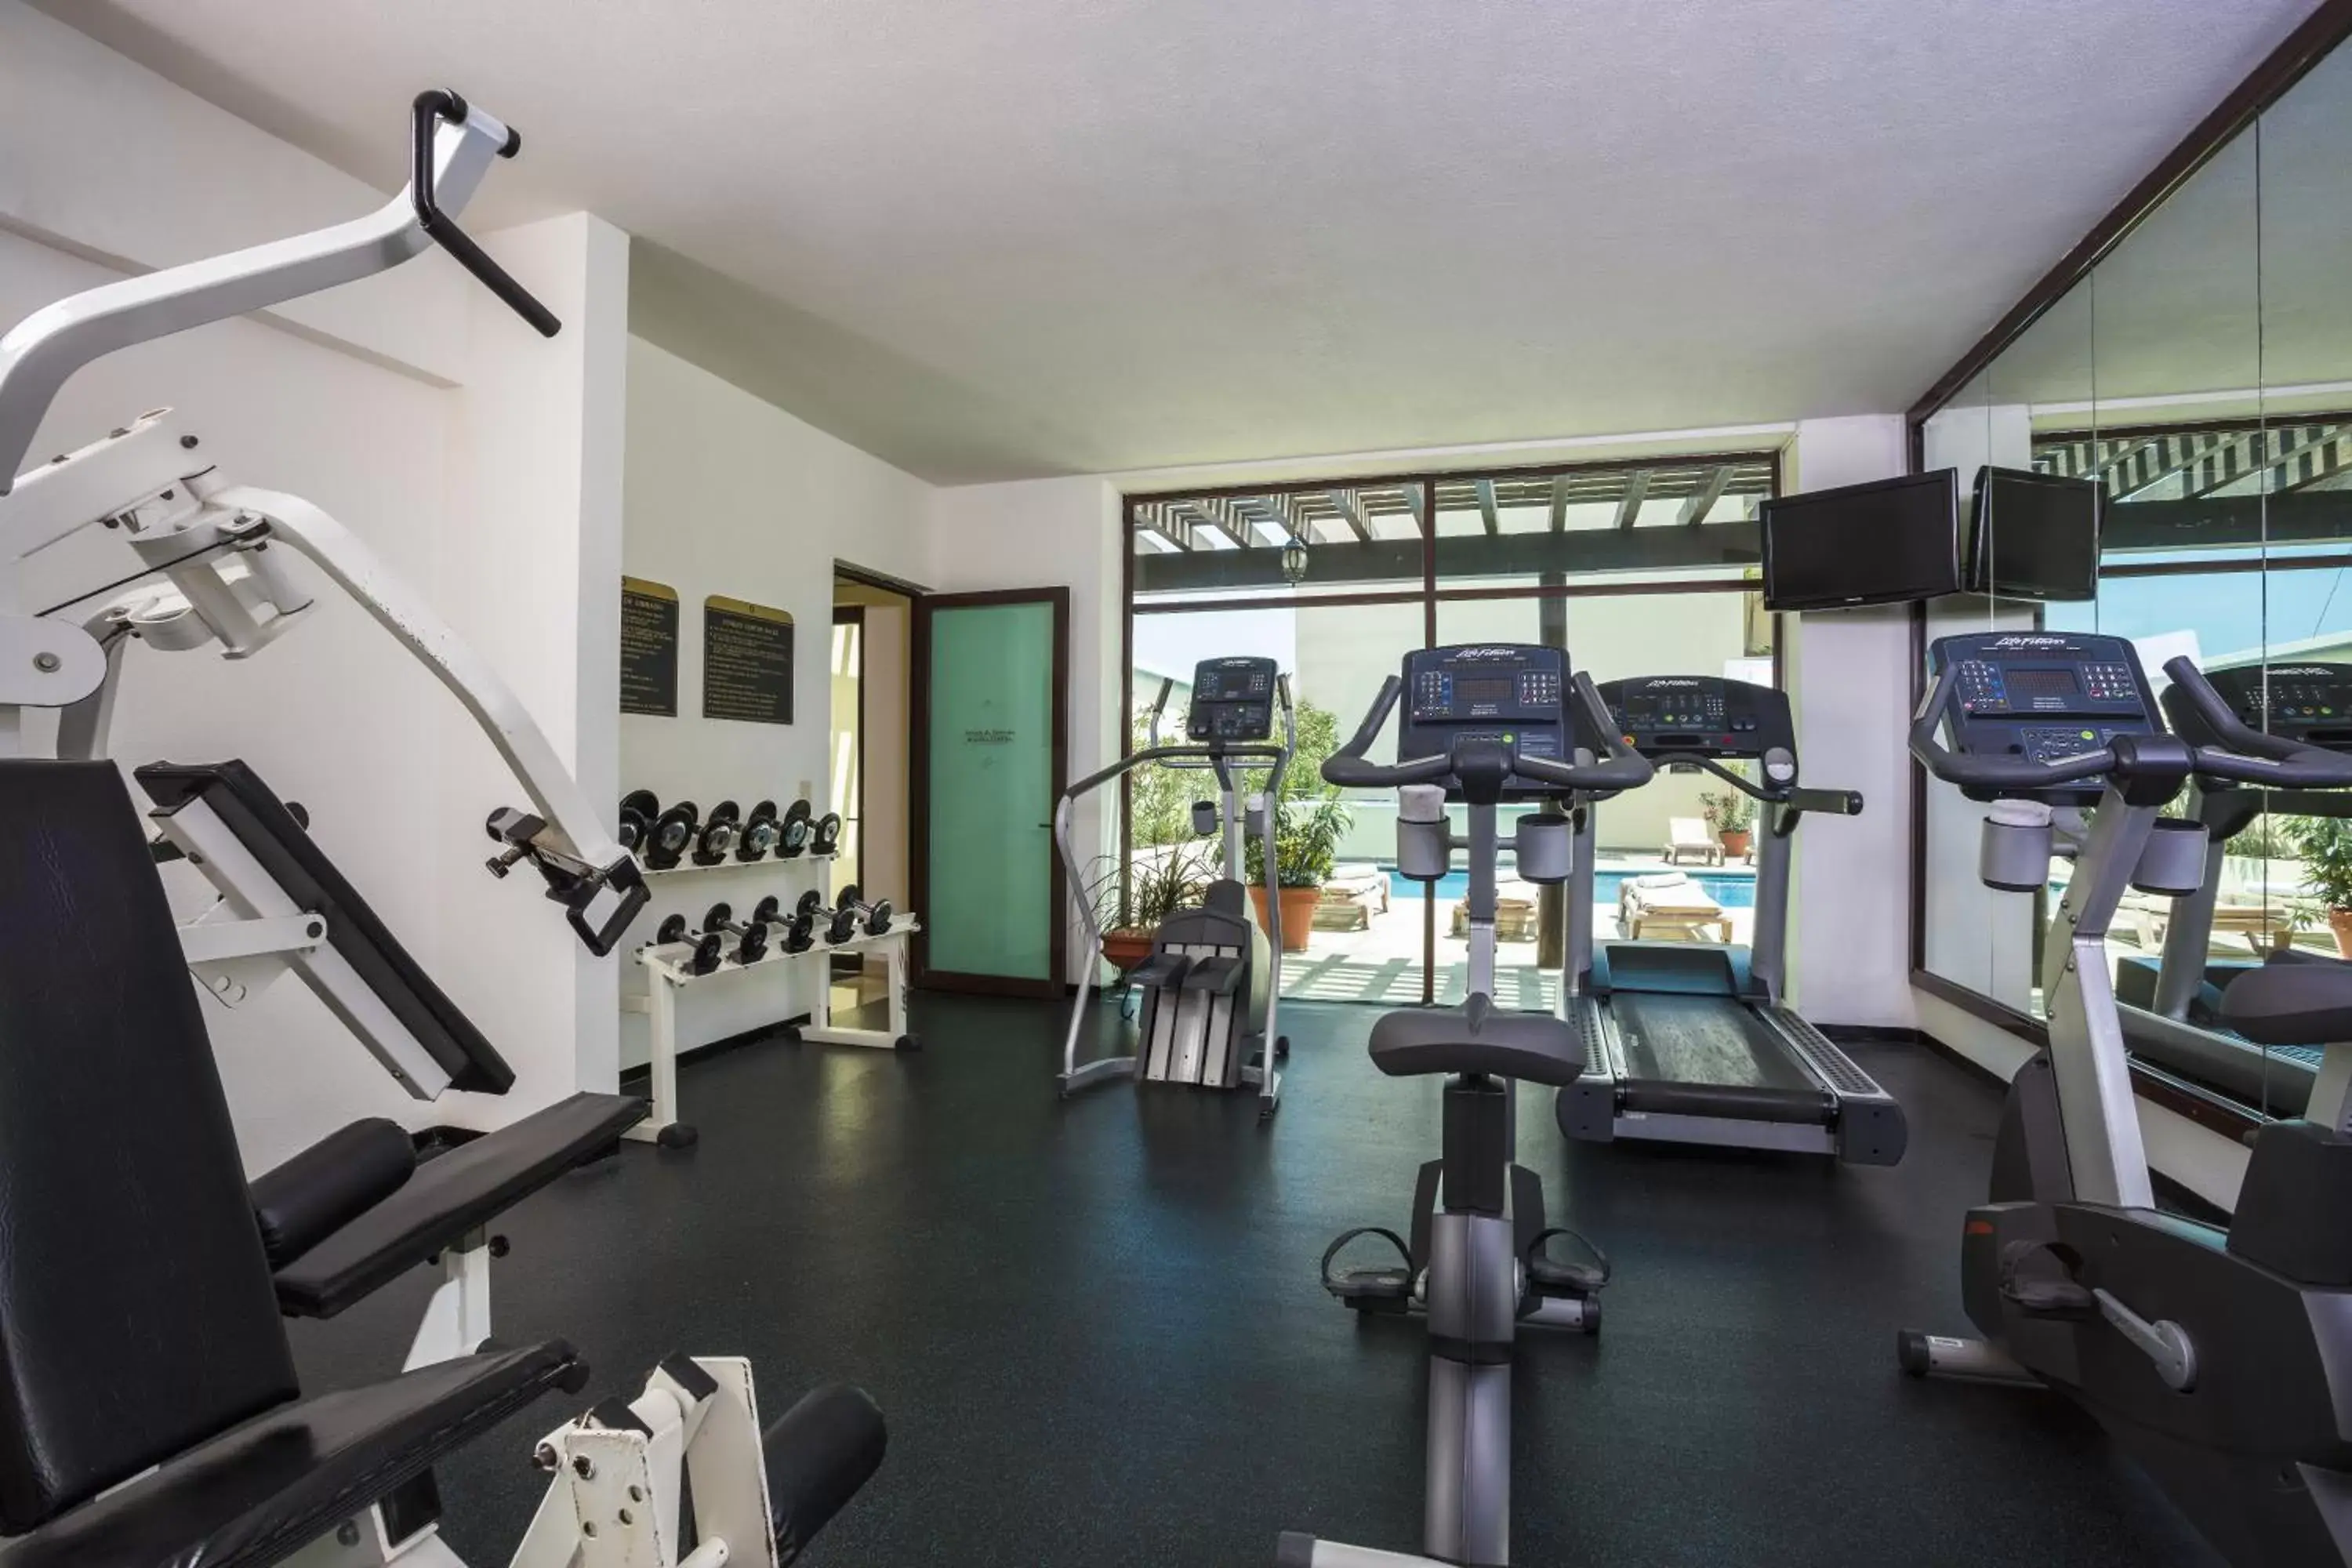 Fitness centre/facilities, Fitness Center/Facilities in Fiesta Inn Veracruz Malecon